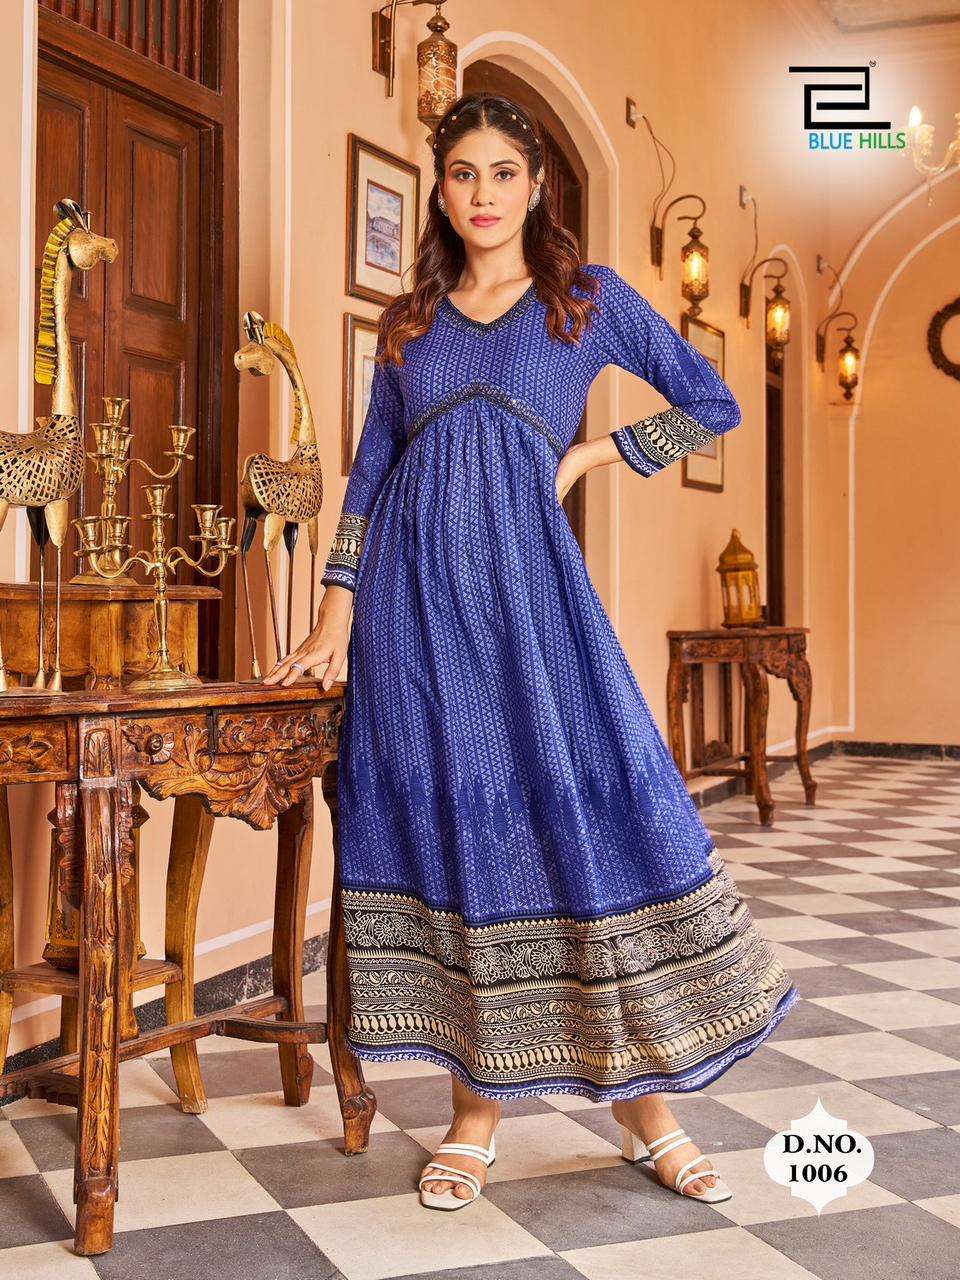 bluehills monaco 1001-1006 series designer latest gown kurti wholesaler surat gujarat